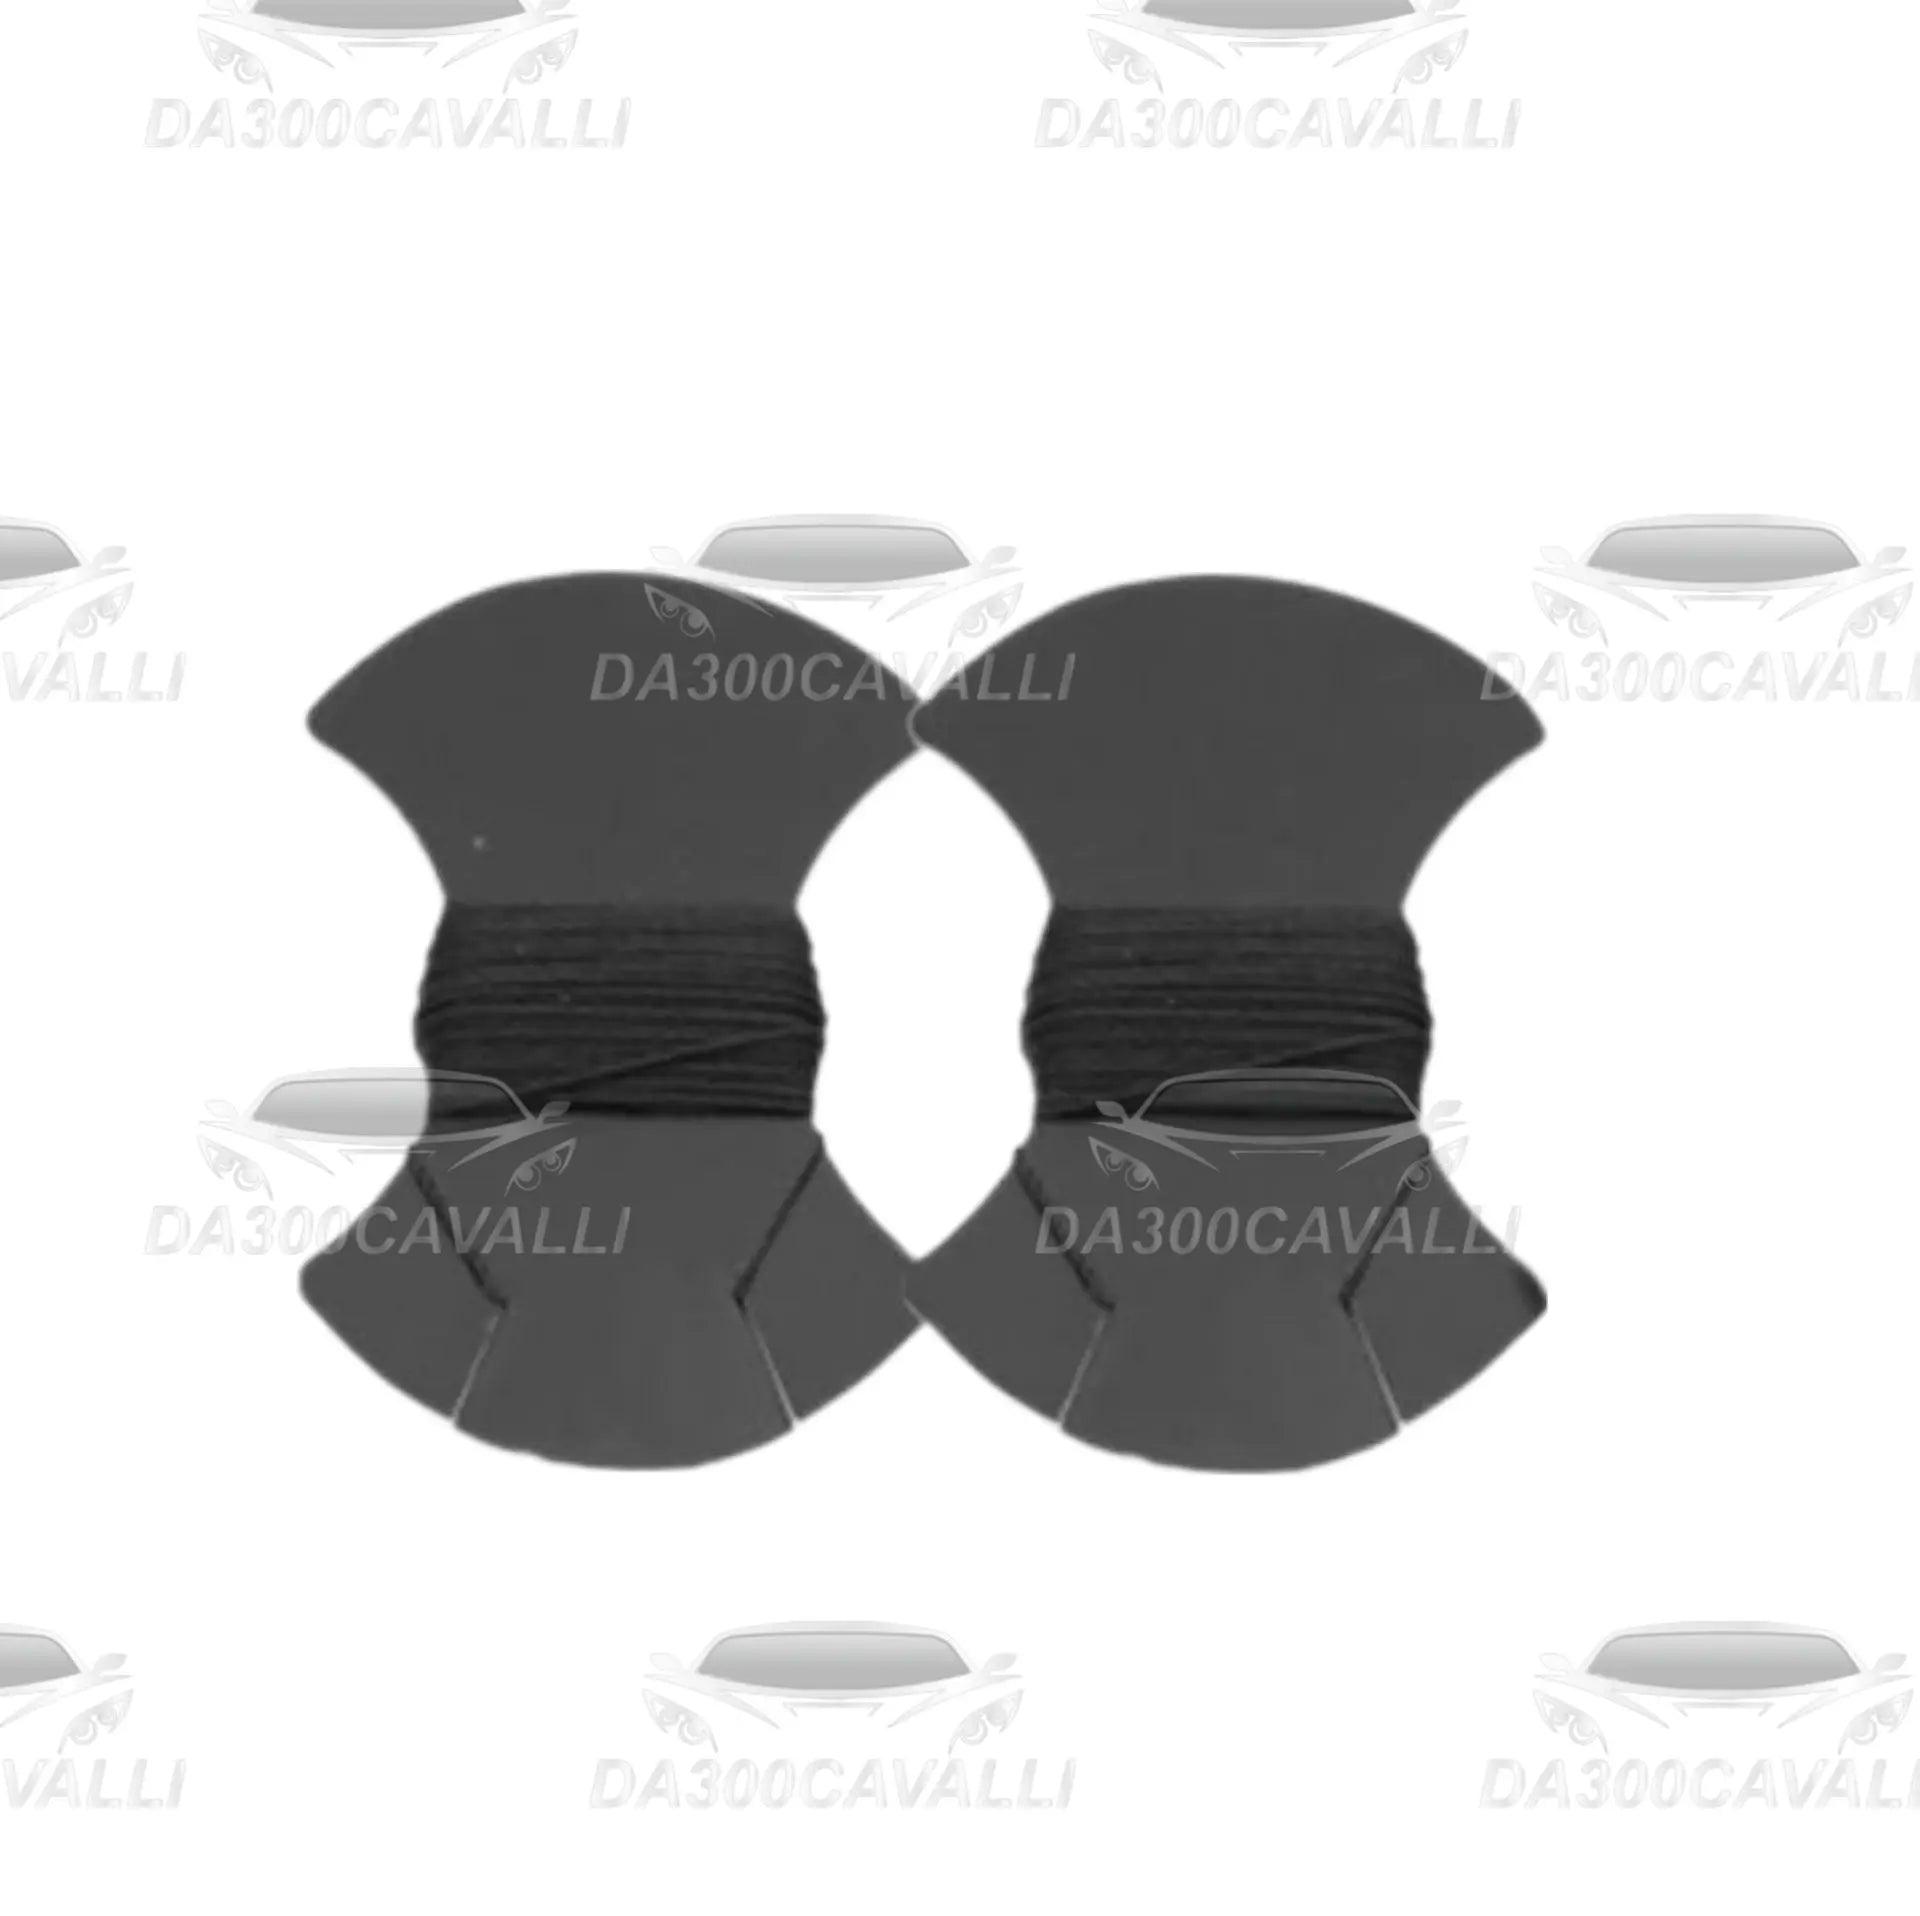 Black Suede Handsewing Steering Wheel Cover For Audi S1 8X S3 8V Sportback S4 B8 Avant S5 8T S6 C7 S7 G8 Rs Q3 8U Sq5 8R Da300Cavalli